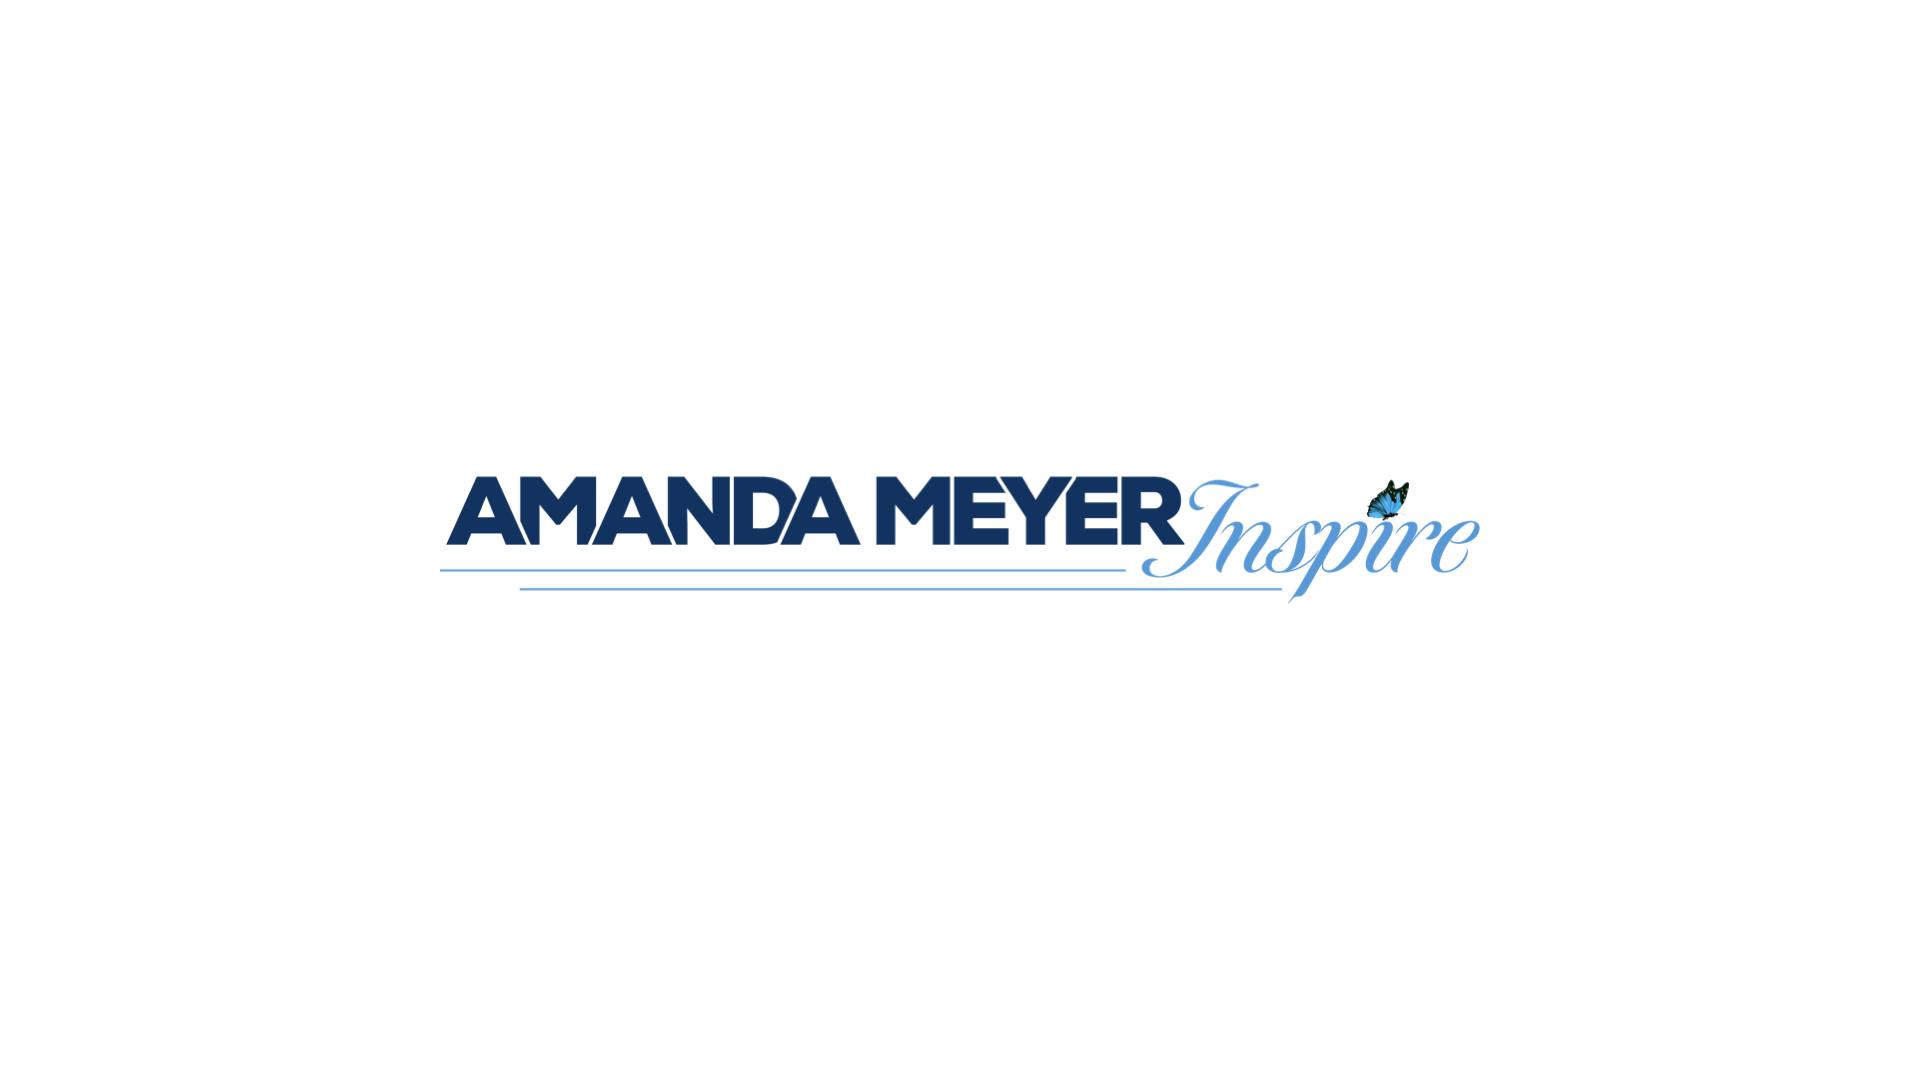 AMANDA MEYER INSPIRE